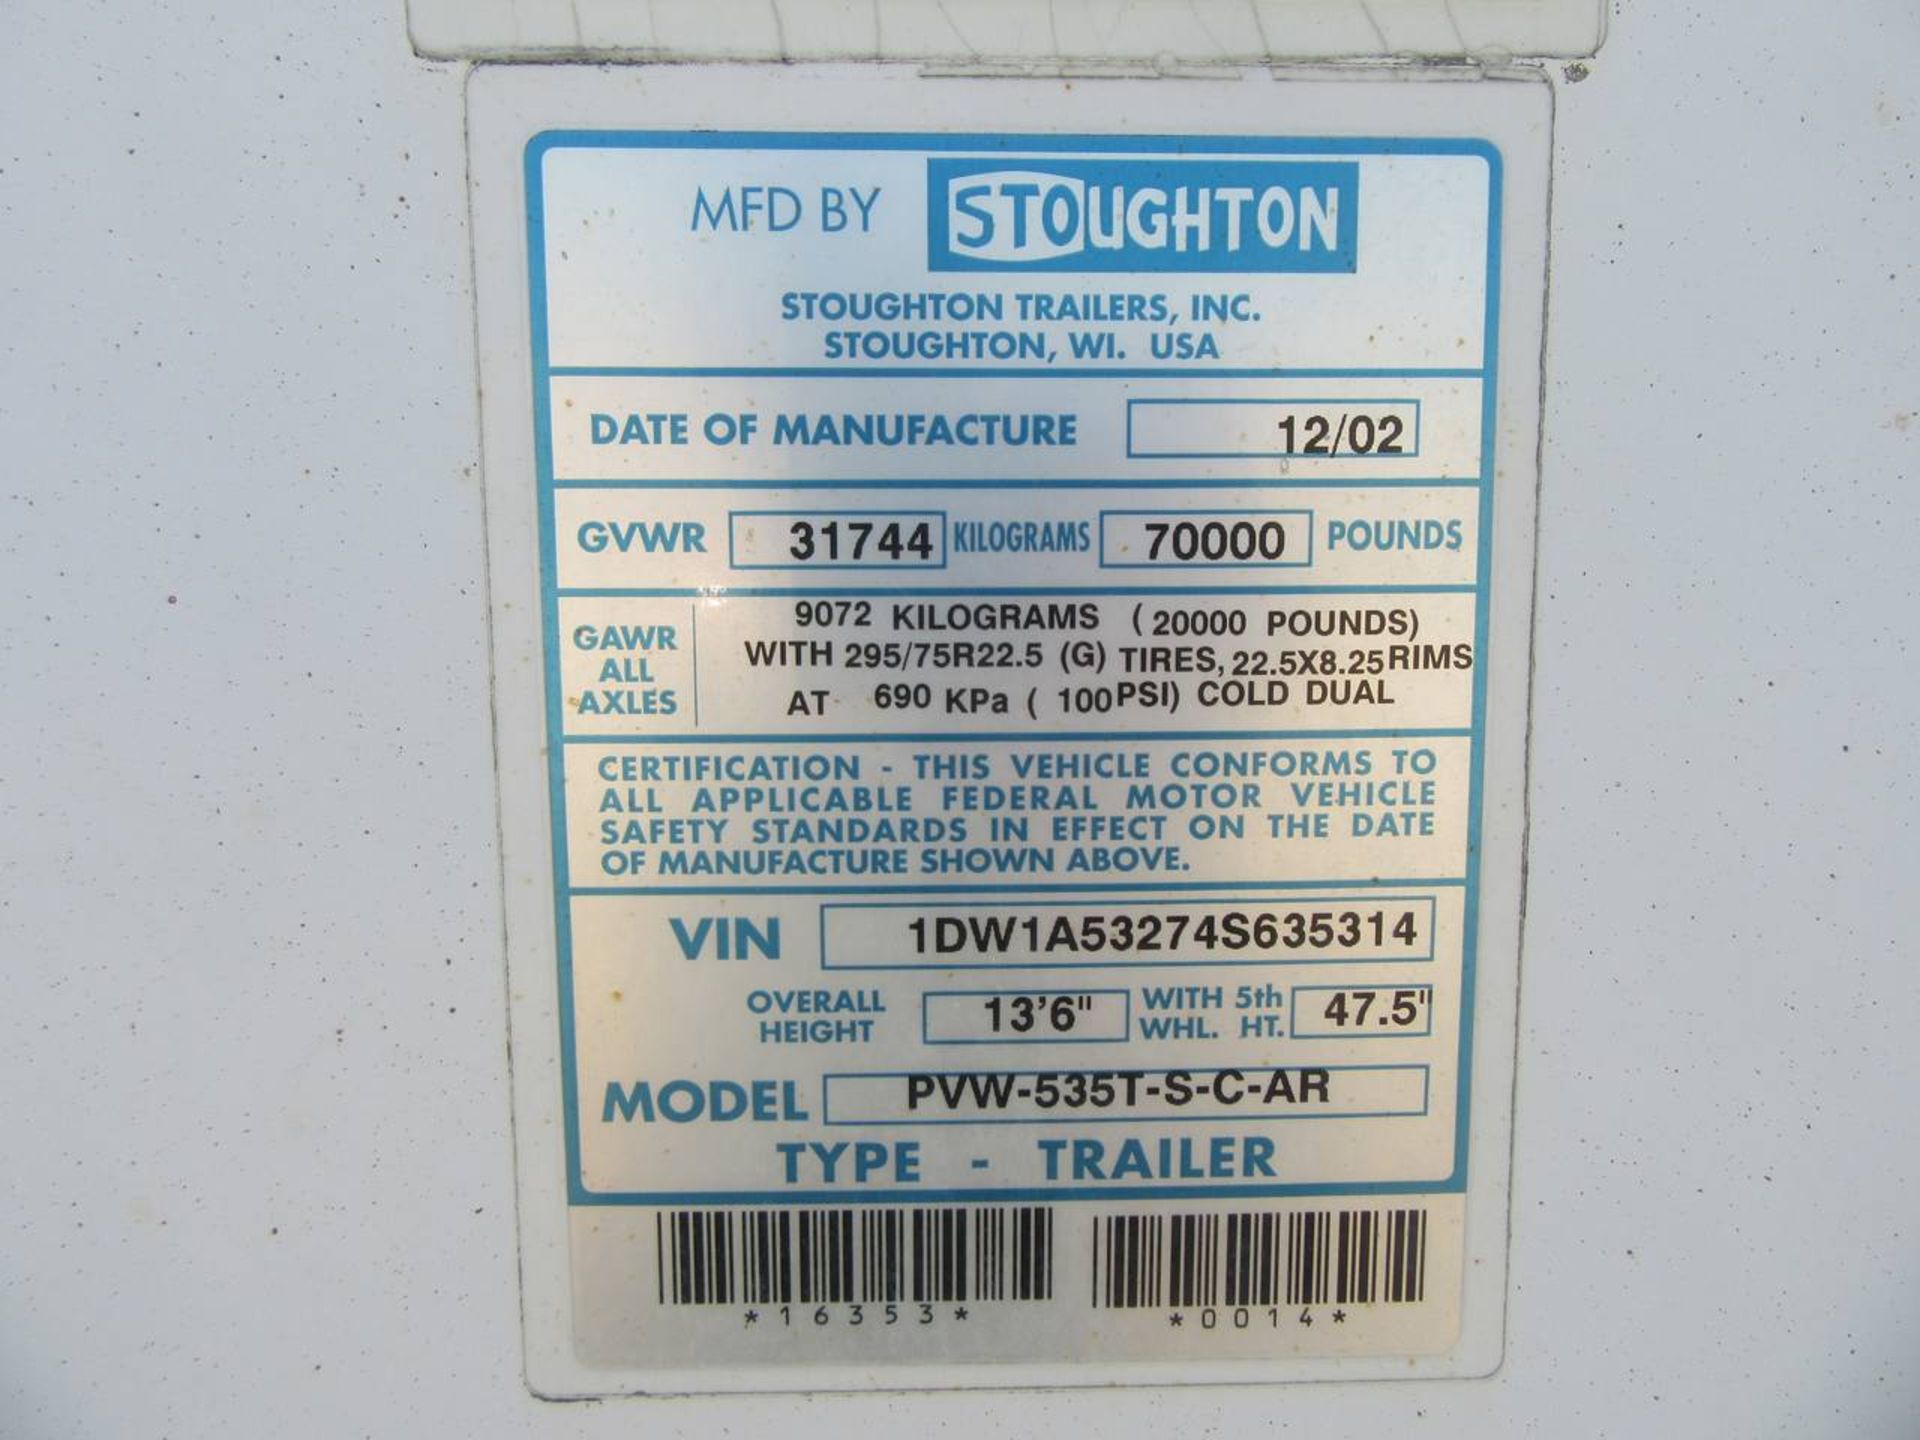 2004 Stoughton AVW-535T-S-C-AR 53' Dry Box Van Trailer - Image 3 of 6